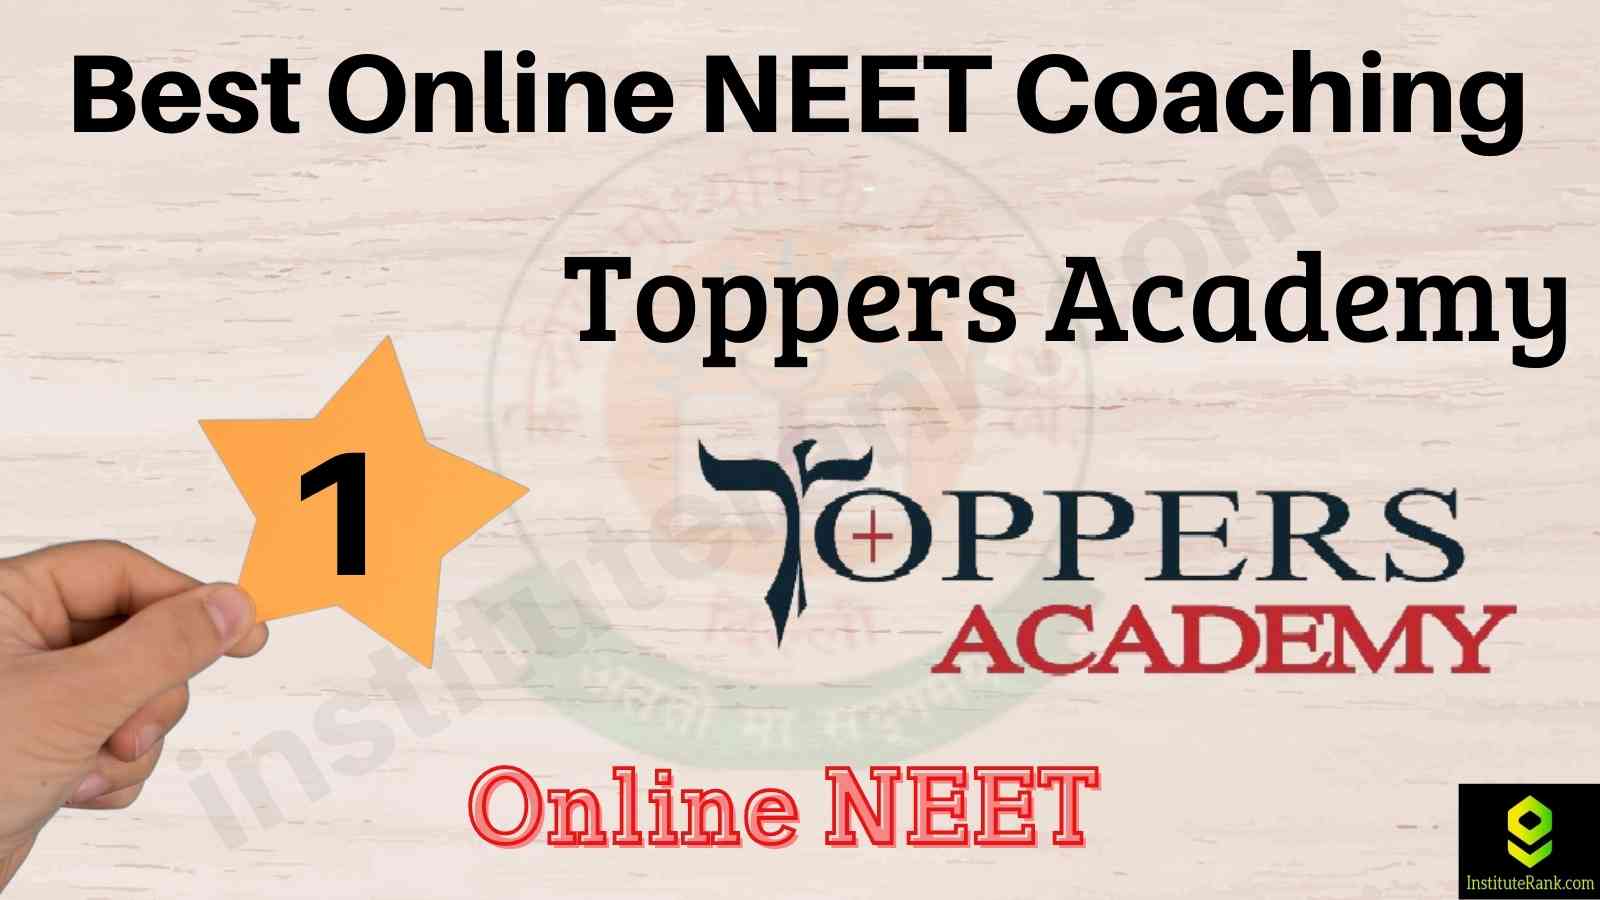 Rank 1. Best Online NEET Coaching